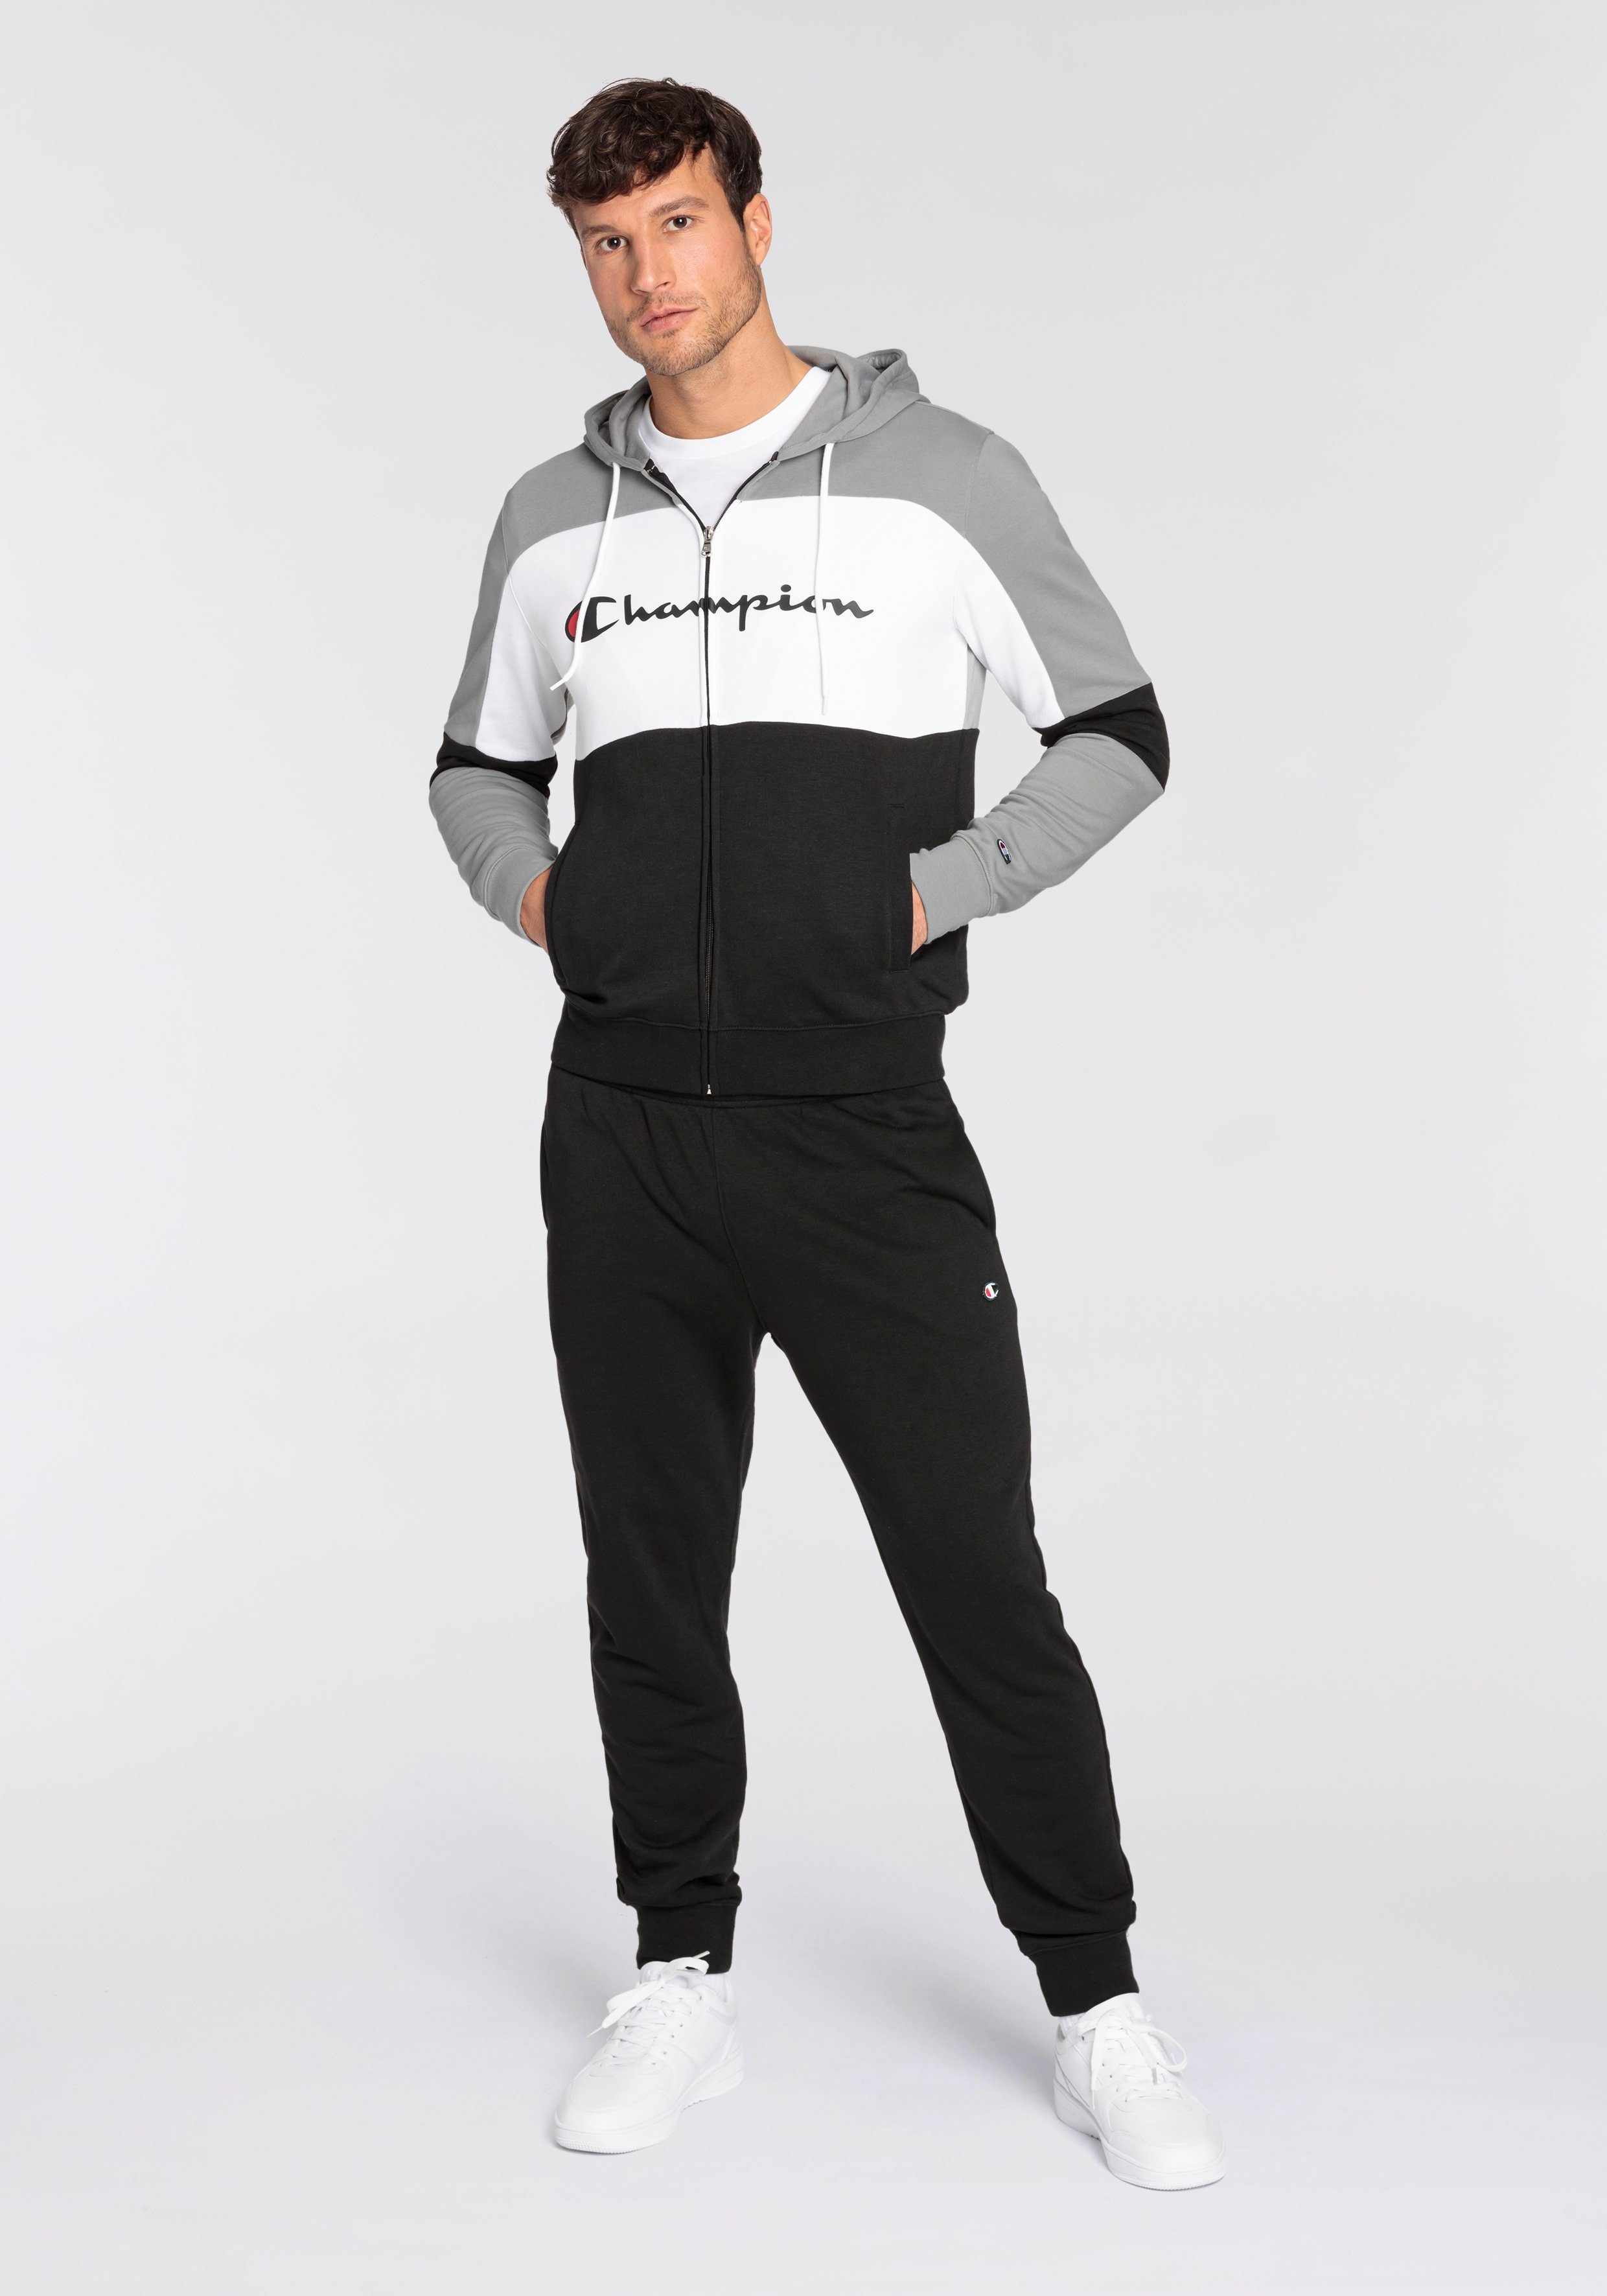 Icons Champion Hooded Trainingsanzug Zip Sweatsuit Full